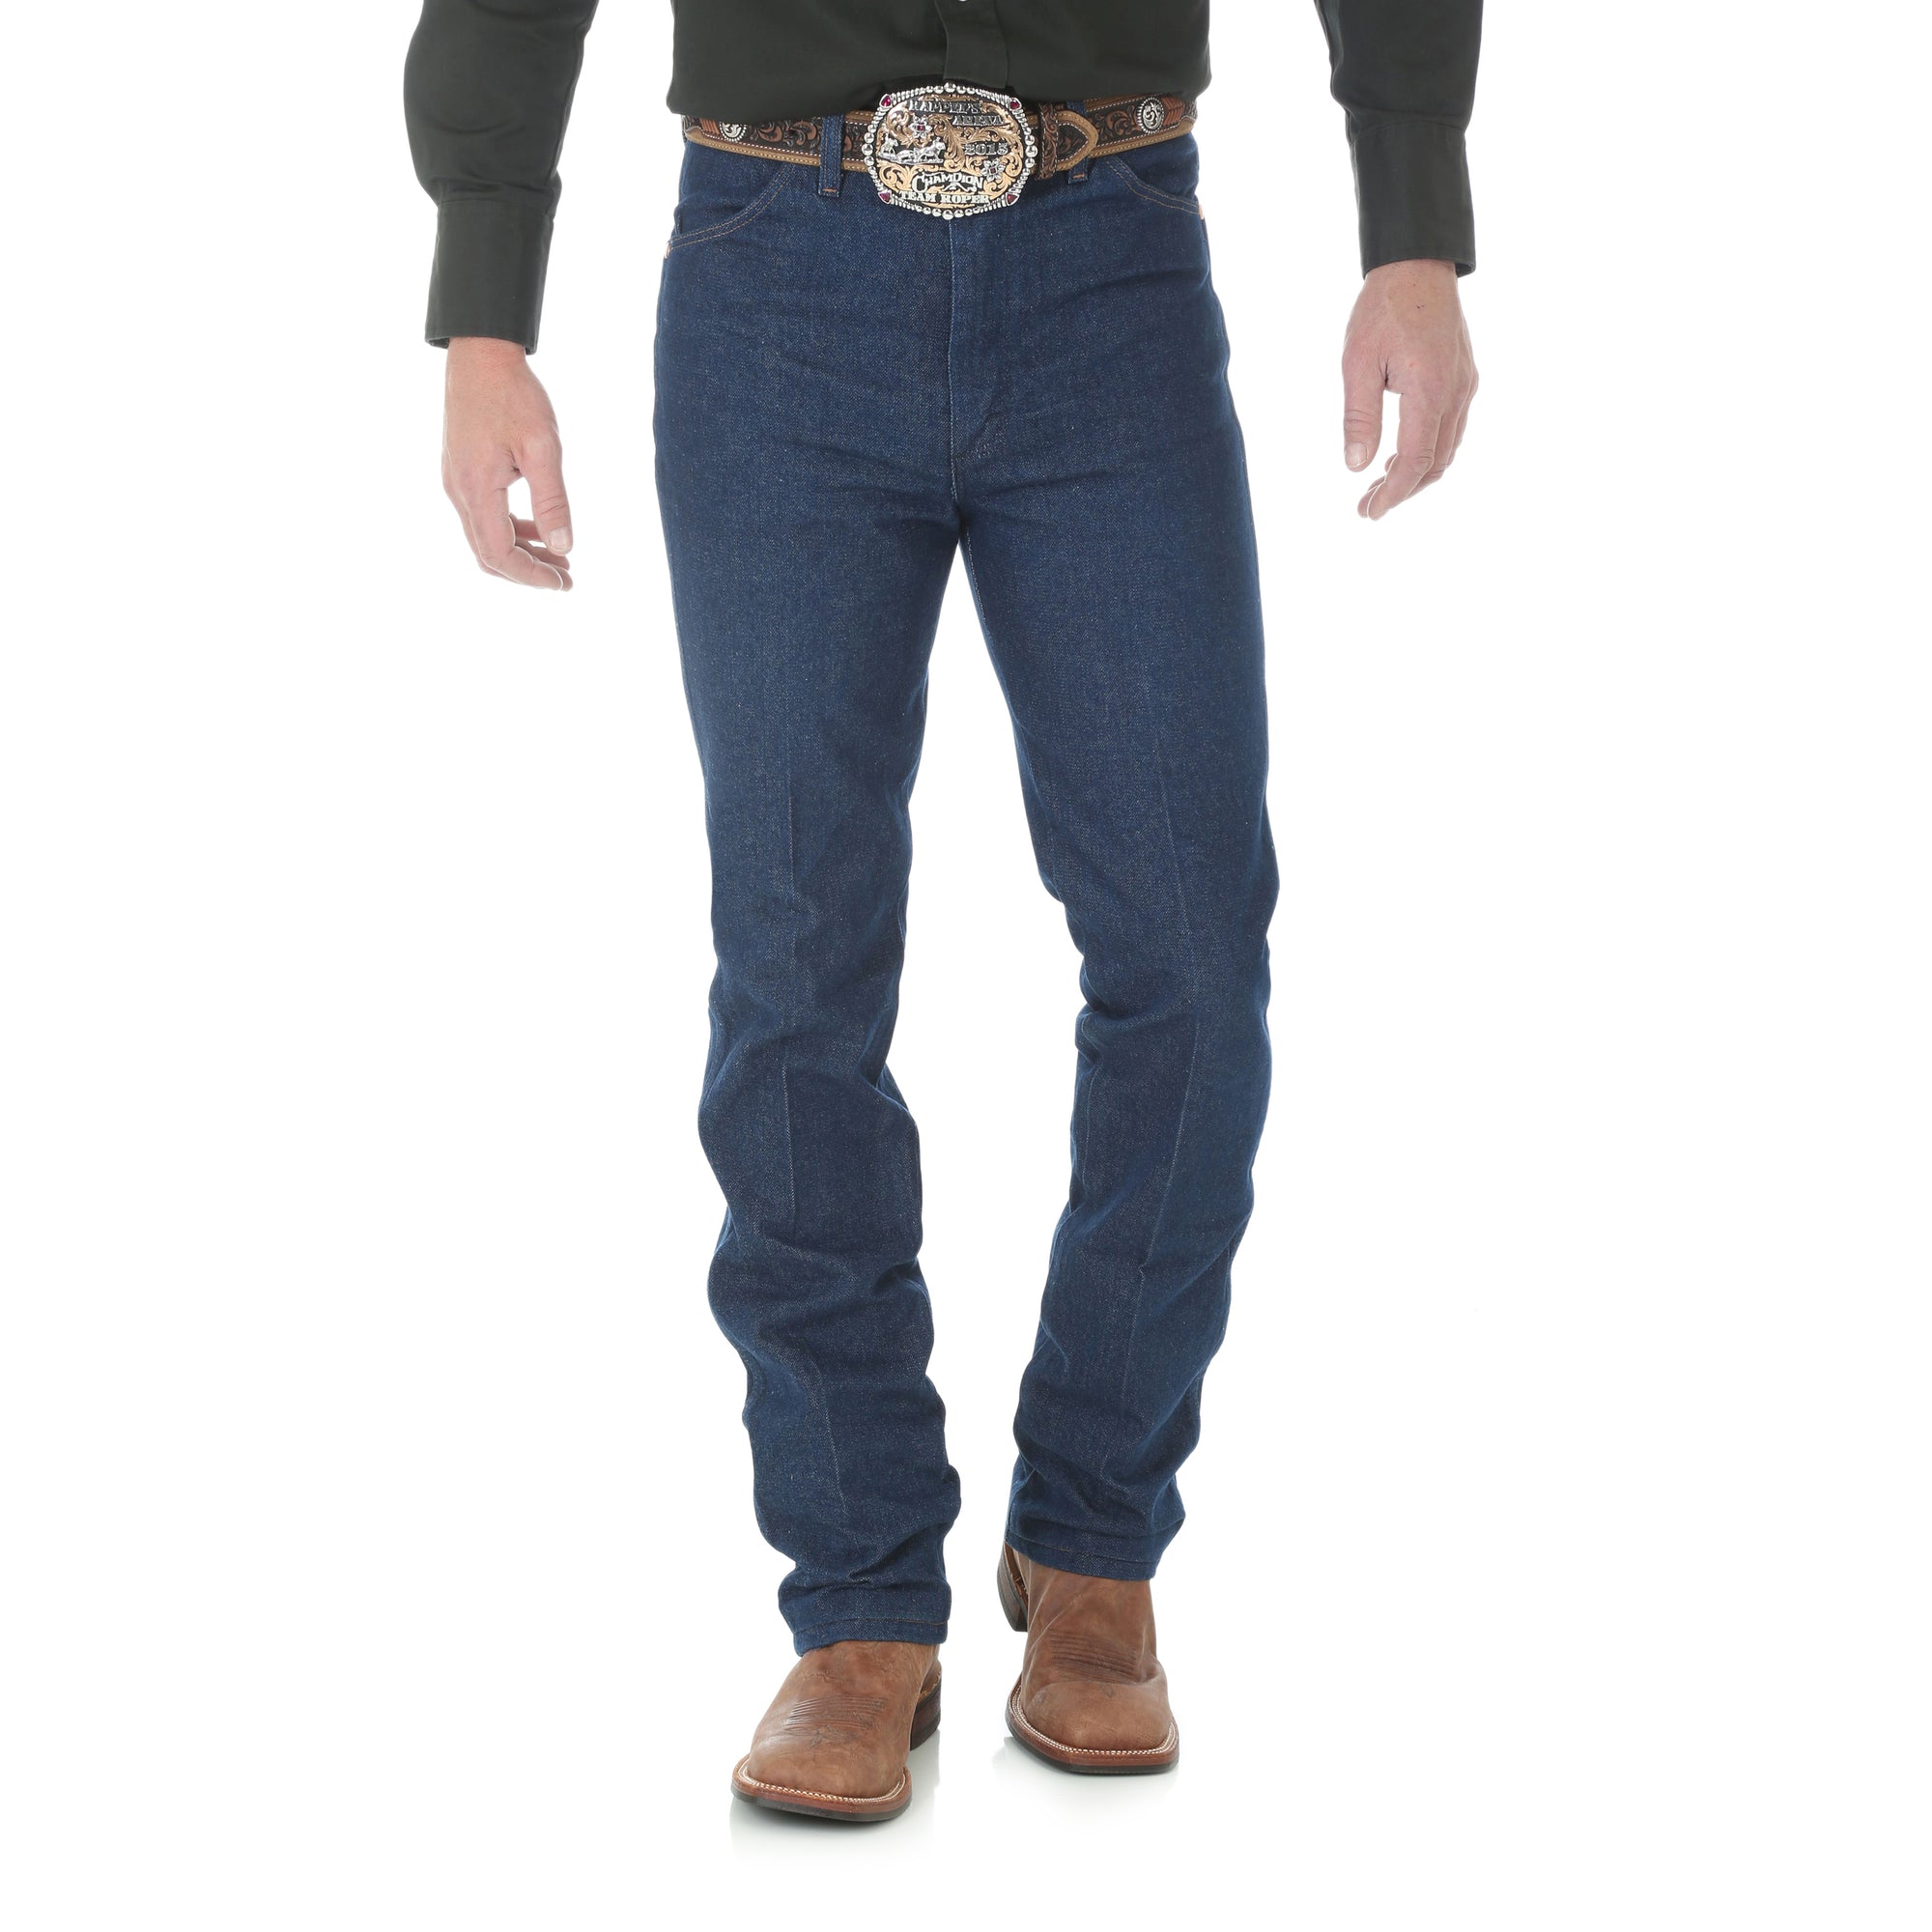 Wrangler Men's Cowboy Cut Slim Fit Jean STYLE 0936DEN